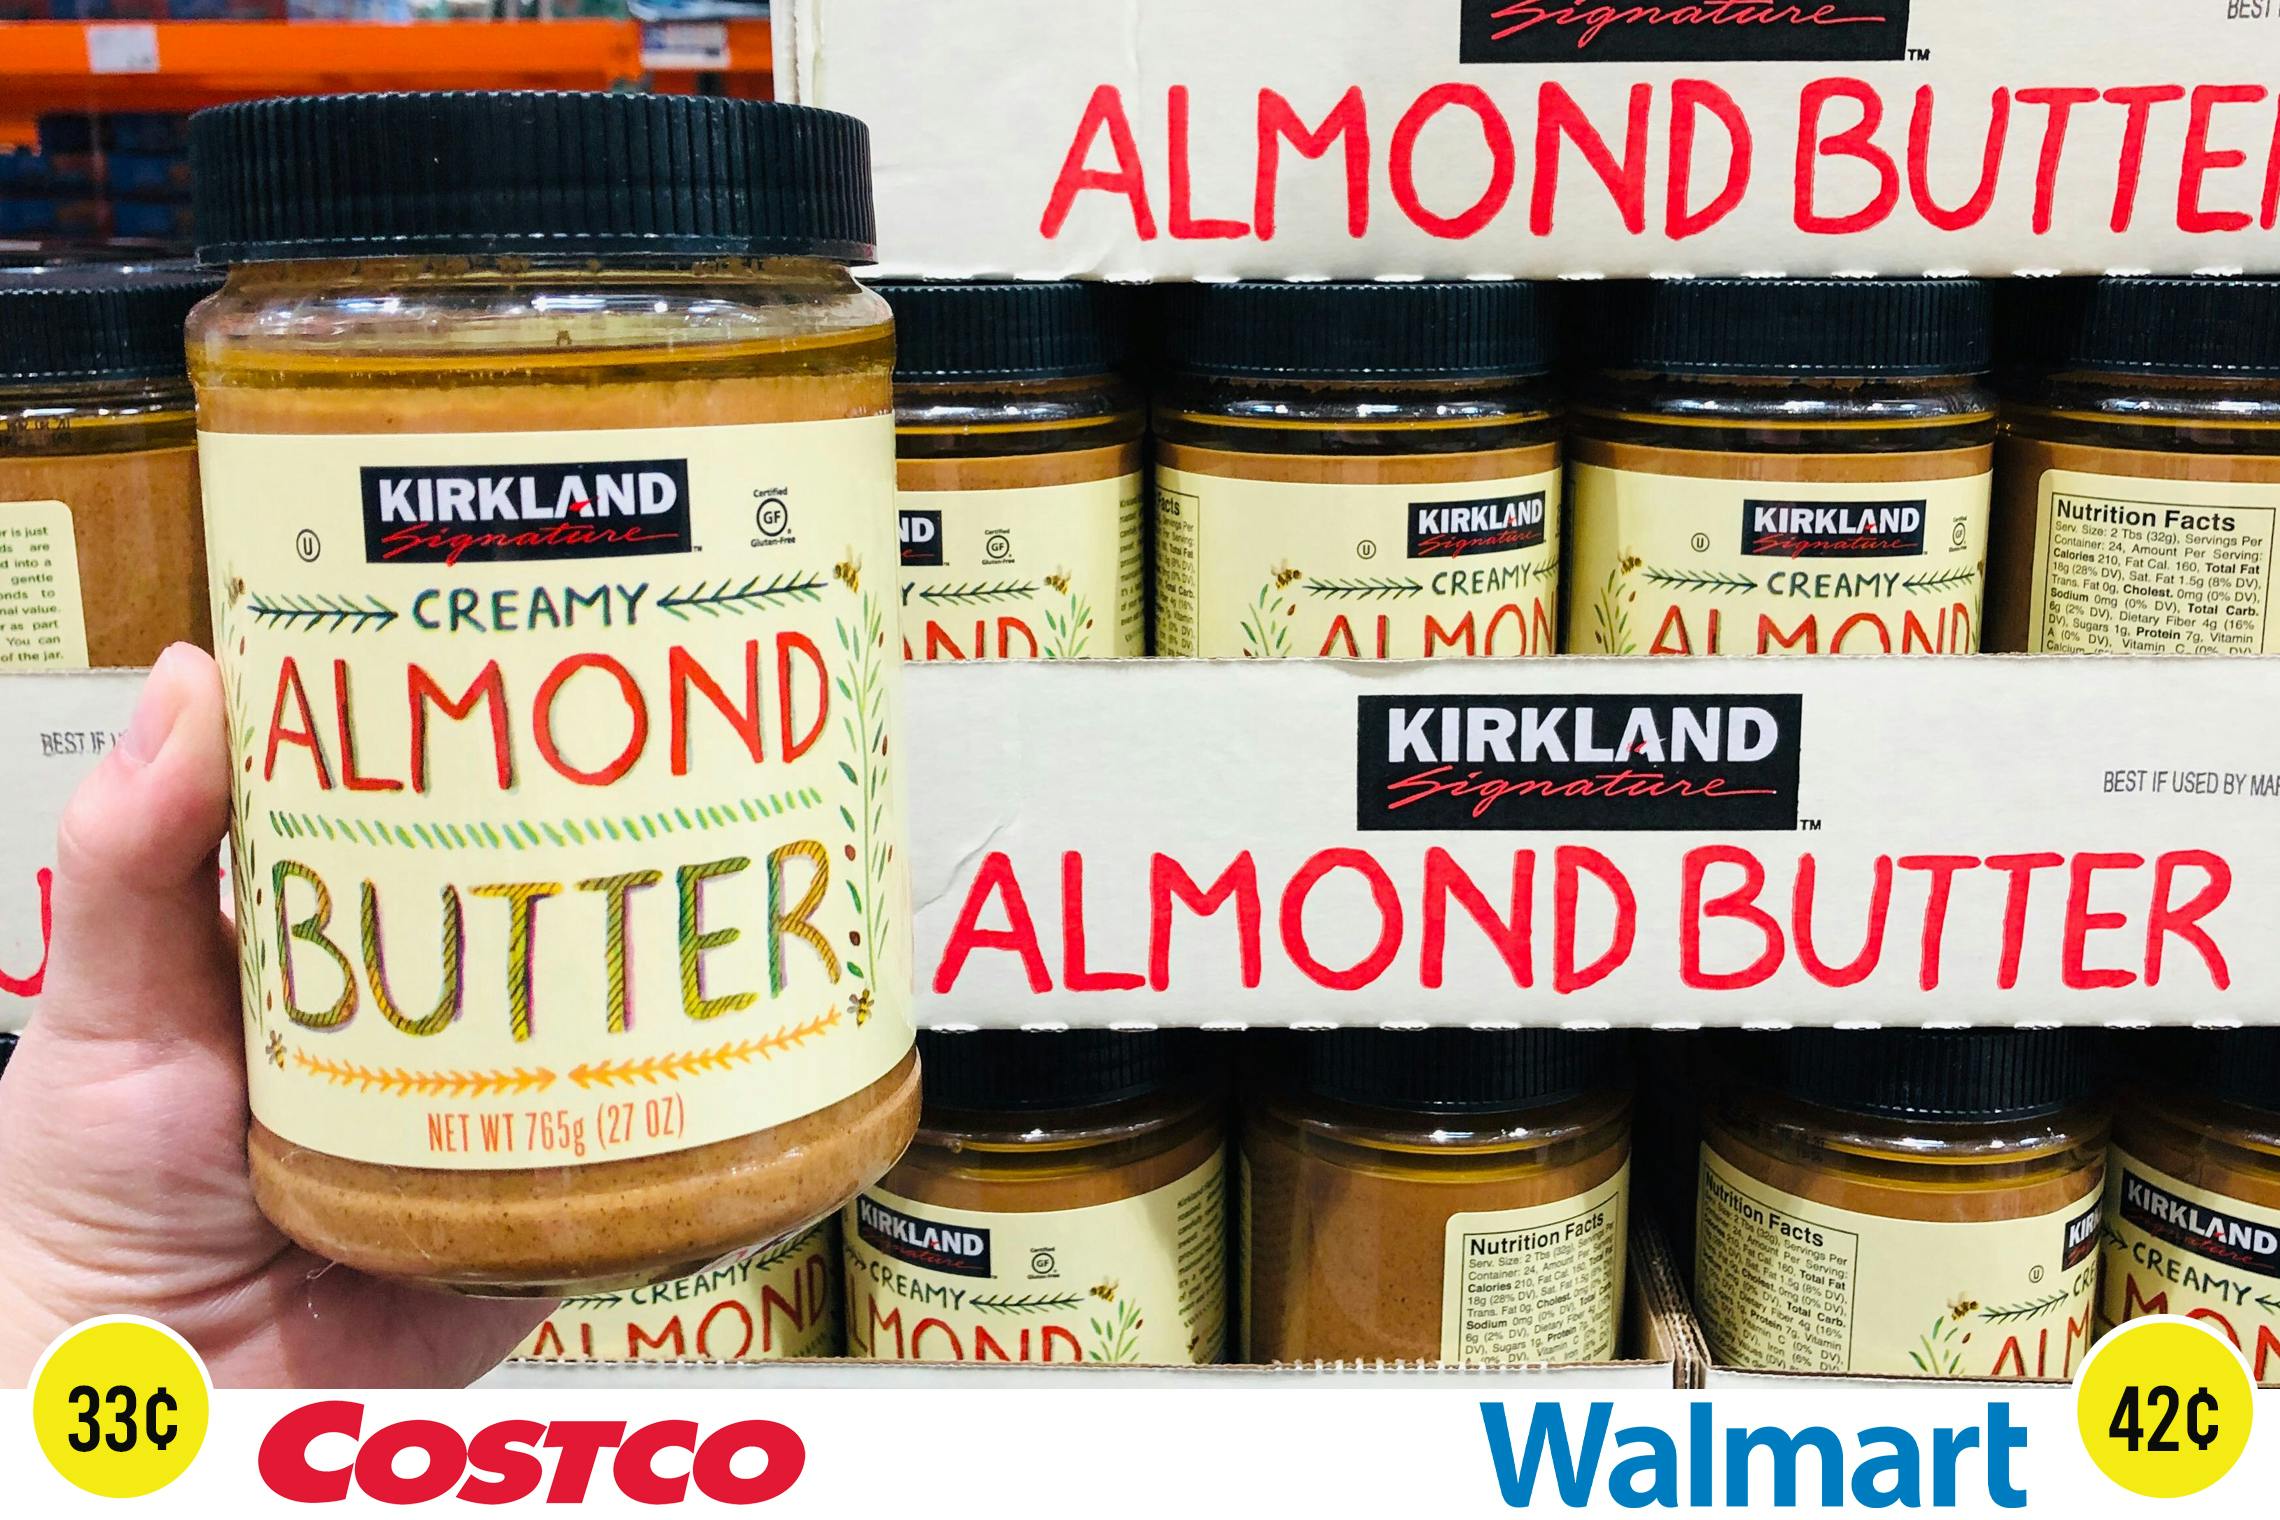 Kirkland brand almond butter at Costco